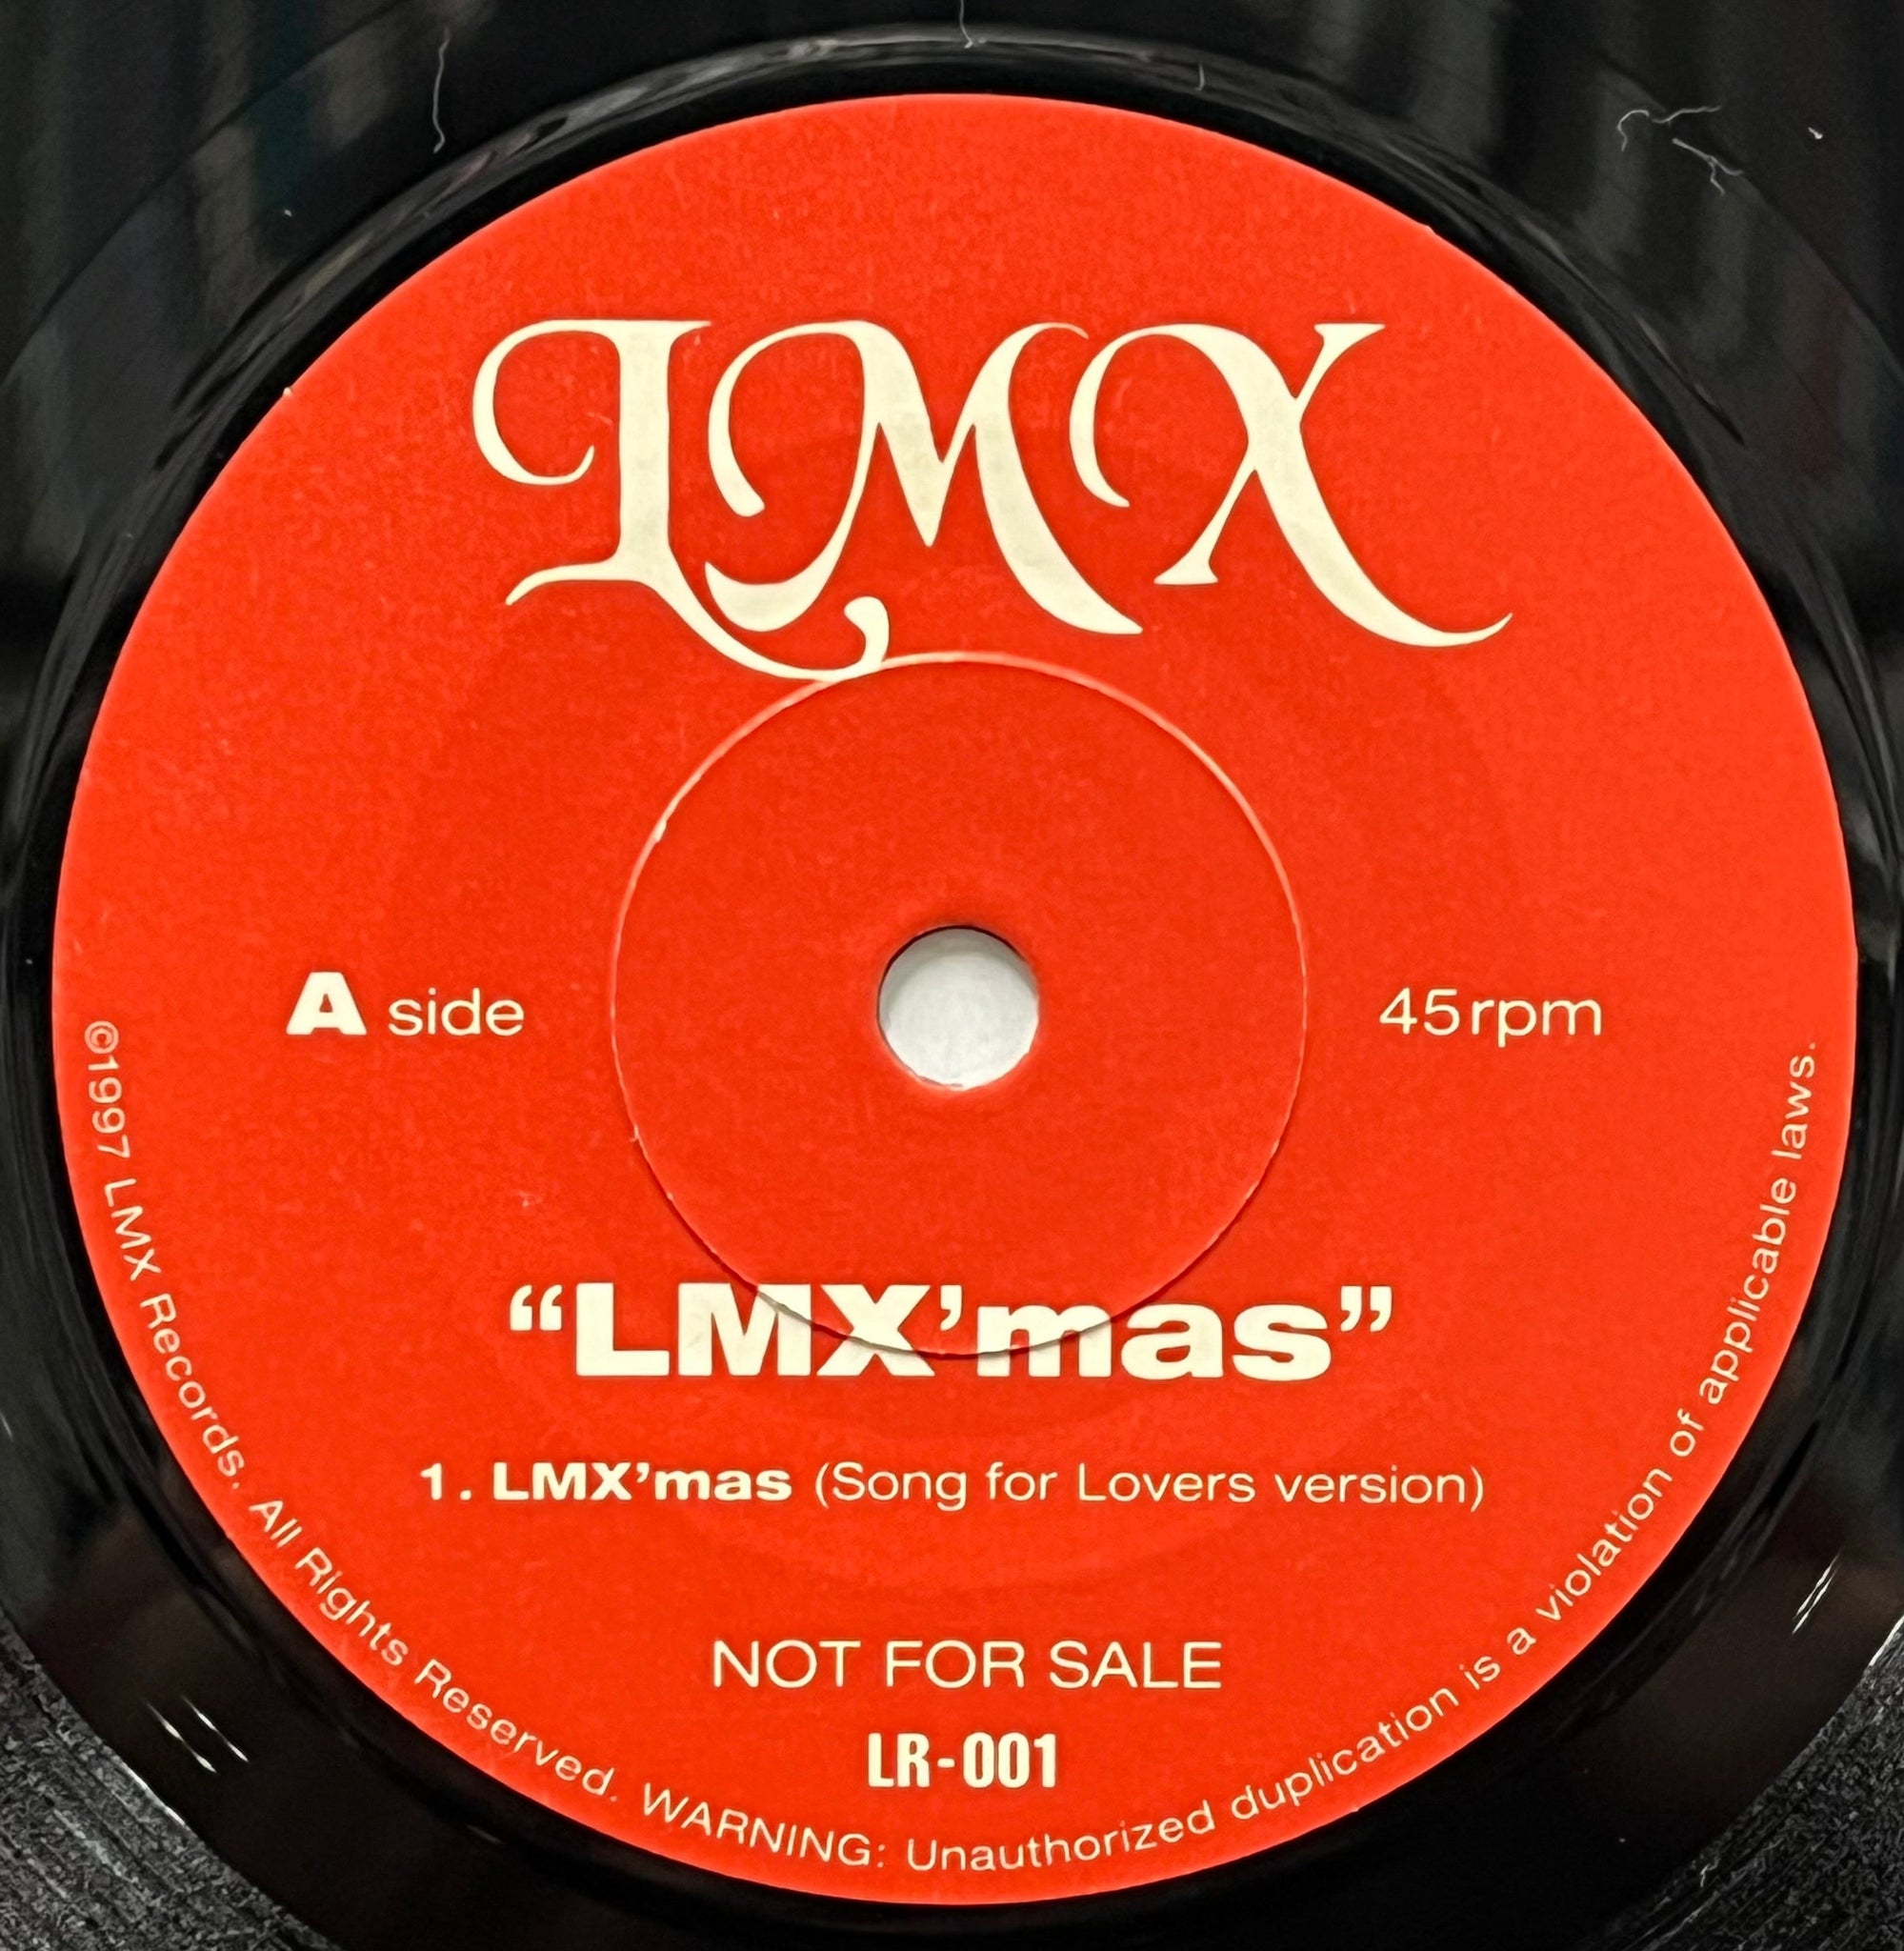 LUV MASTER X / LMX'mas (LMX Records – LR 001, 7inch) Promo